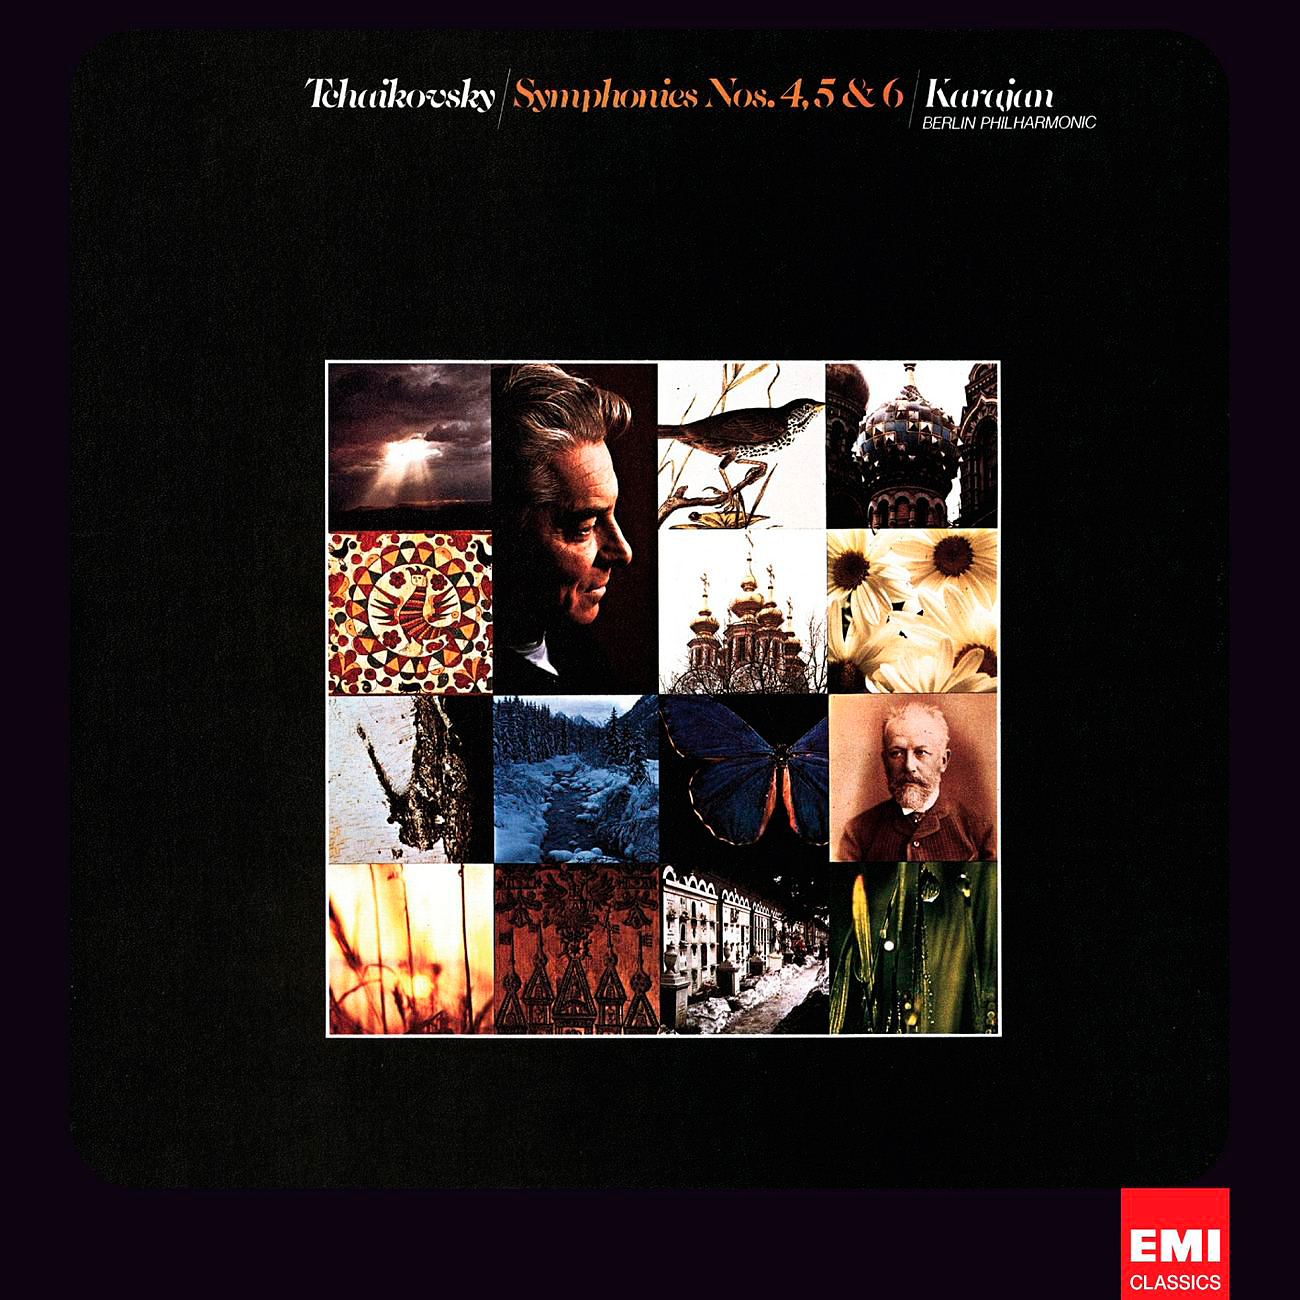 Tchaikovsky: Symphonies Nos. 4, 5 & 6 ‘Pathethique’ - Herbert von Karajan, Berlin Philharmonic Orchestra (1972/2012) [HDTracks FLAC 24bit/96kHz]